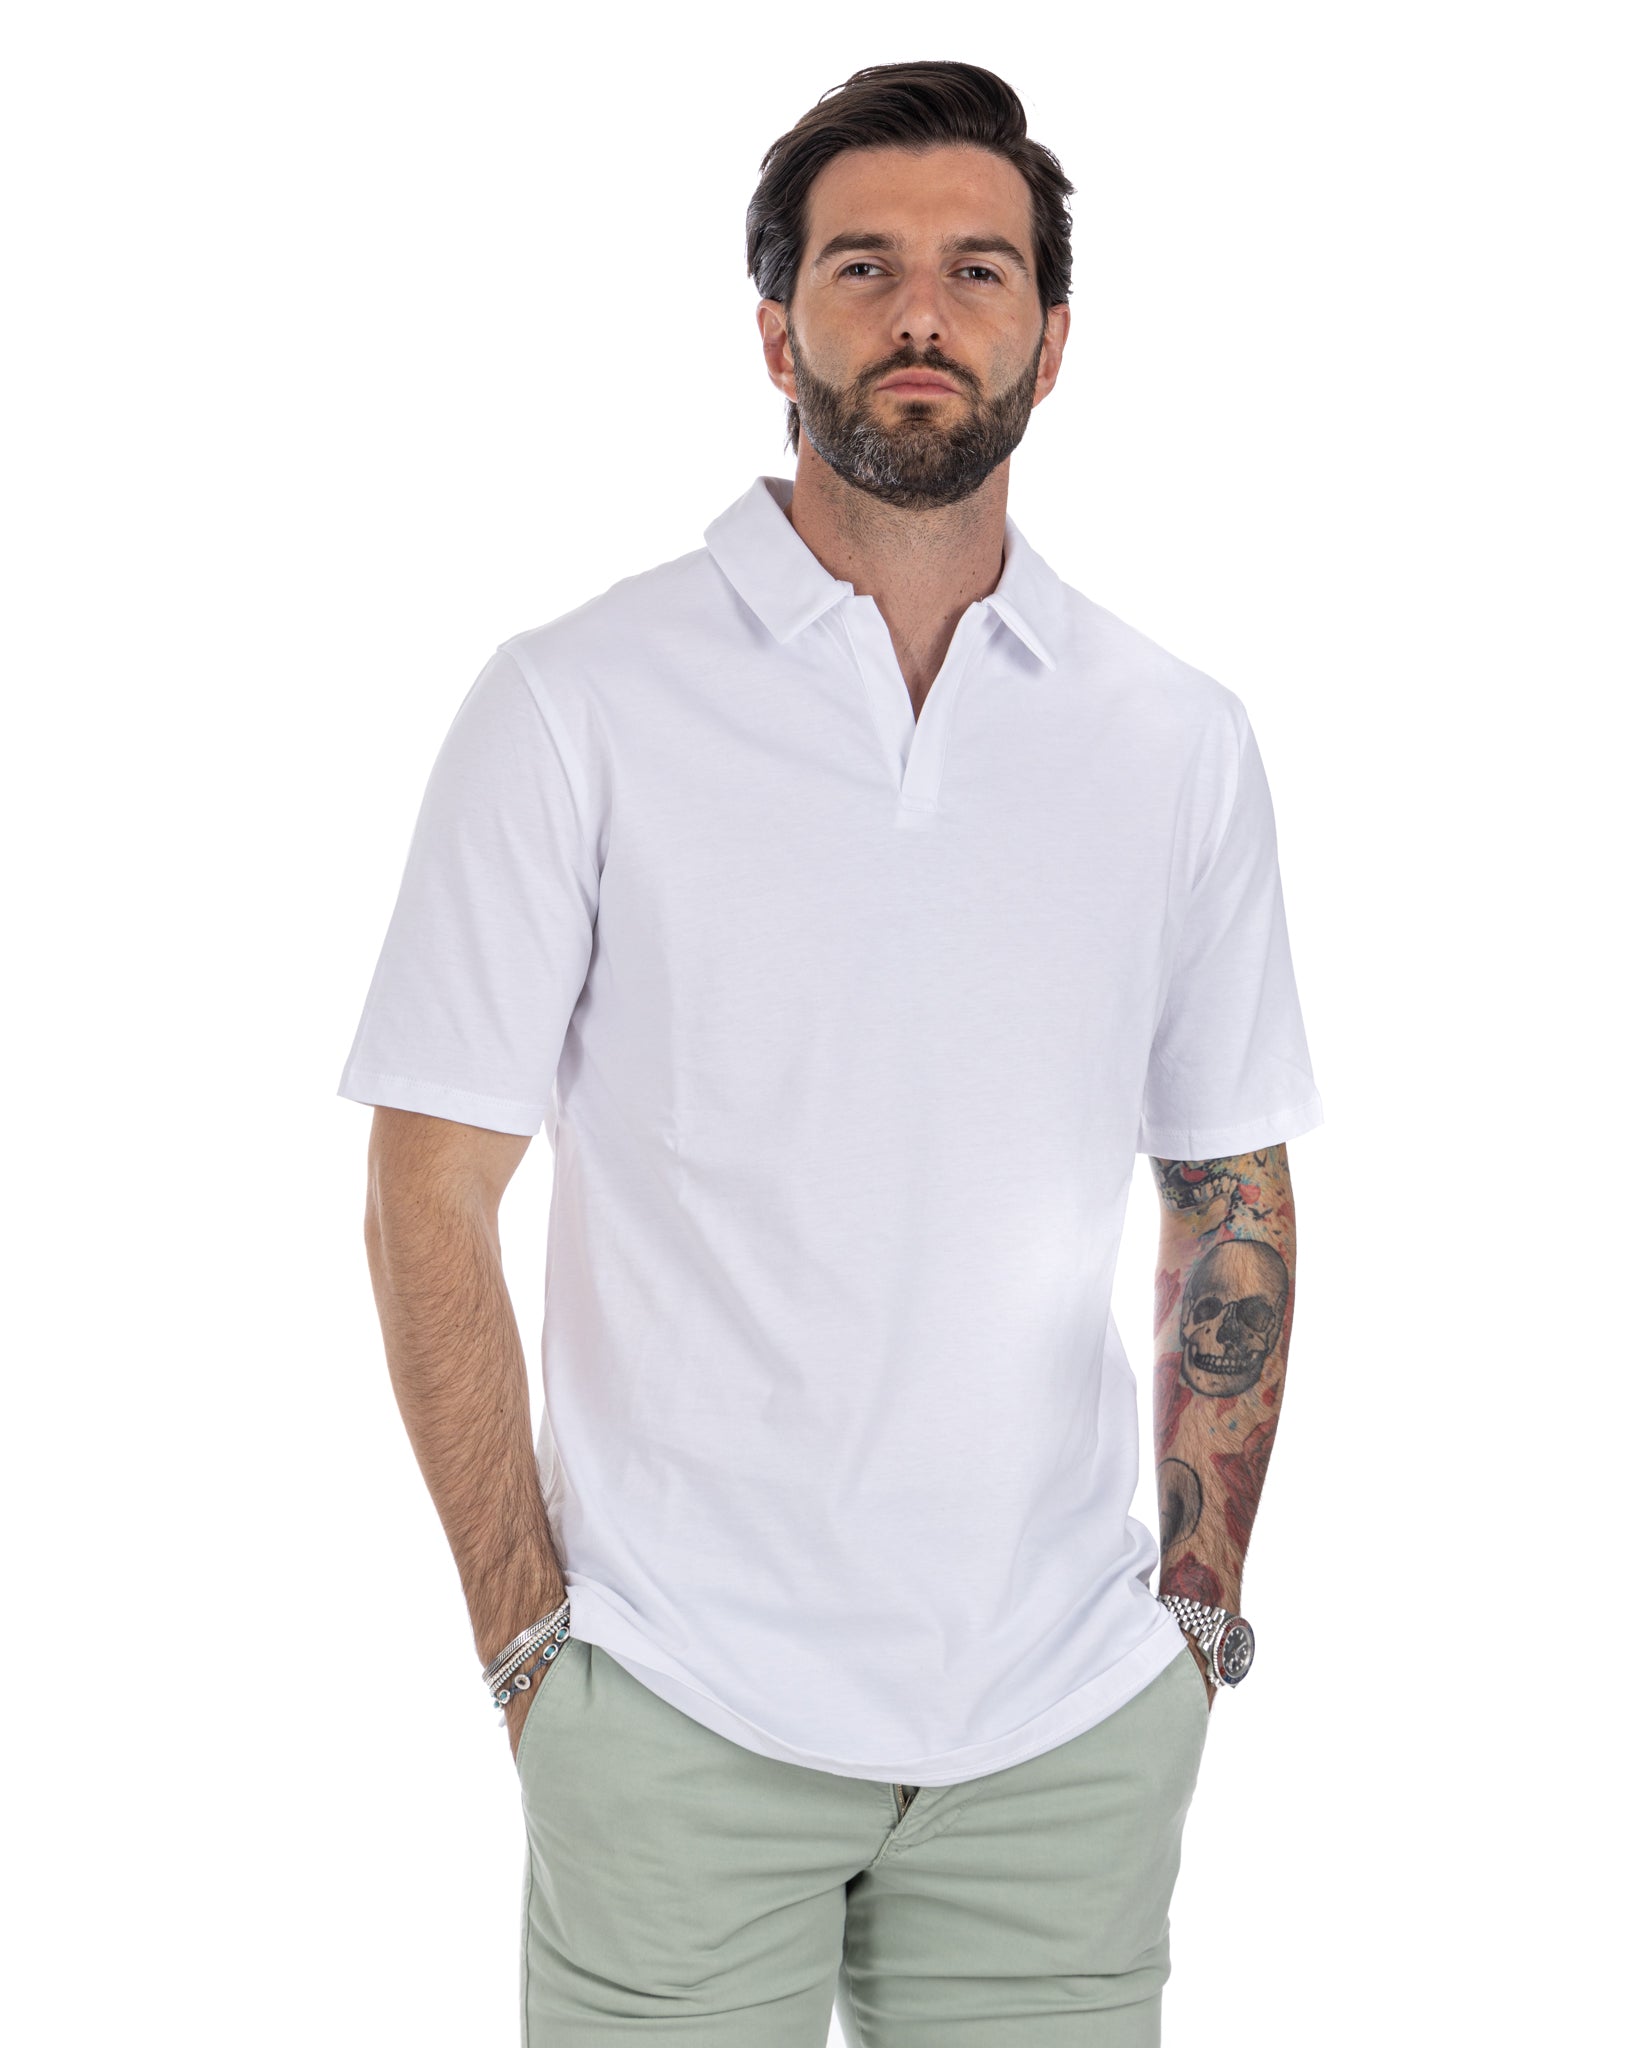 Tee - T-shirt basique en coton blanc